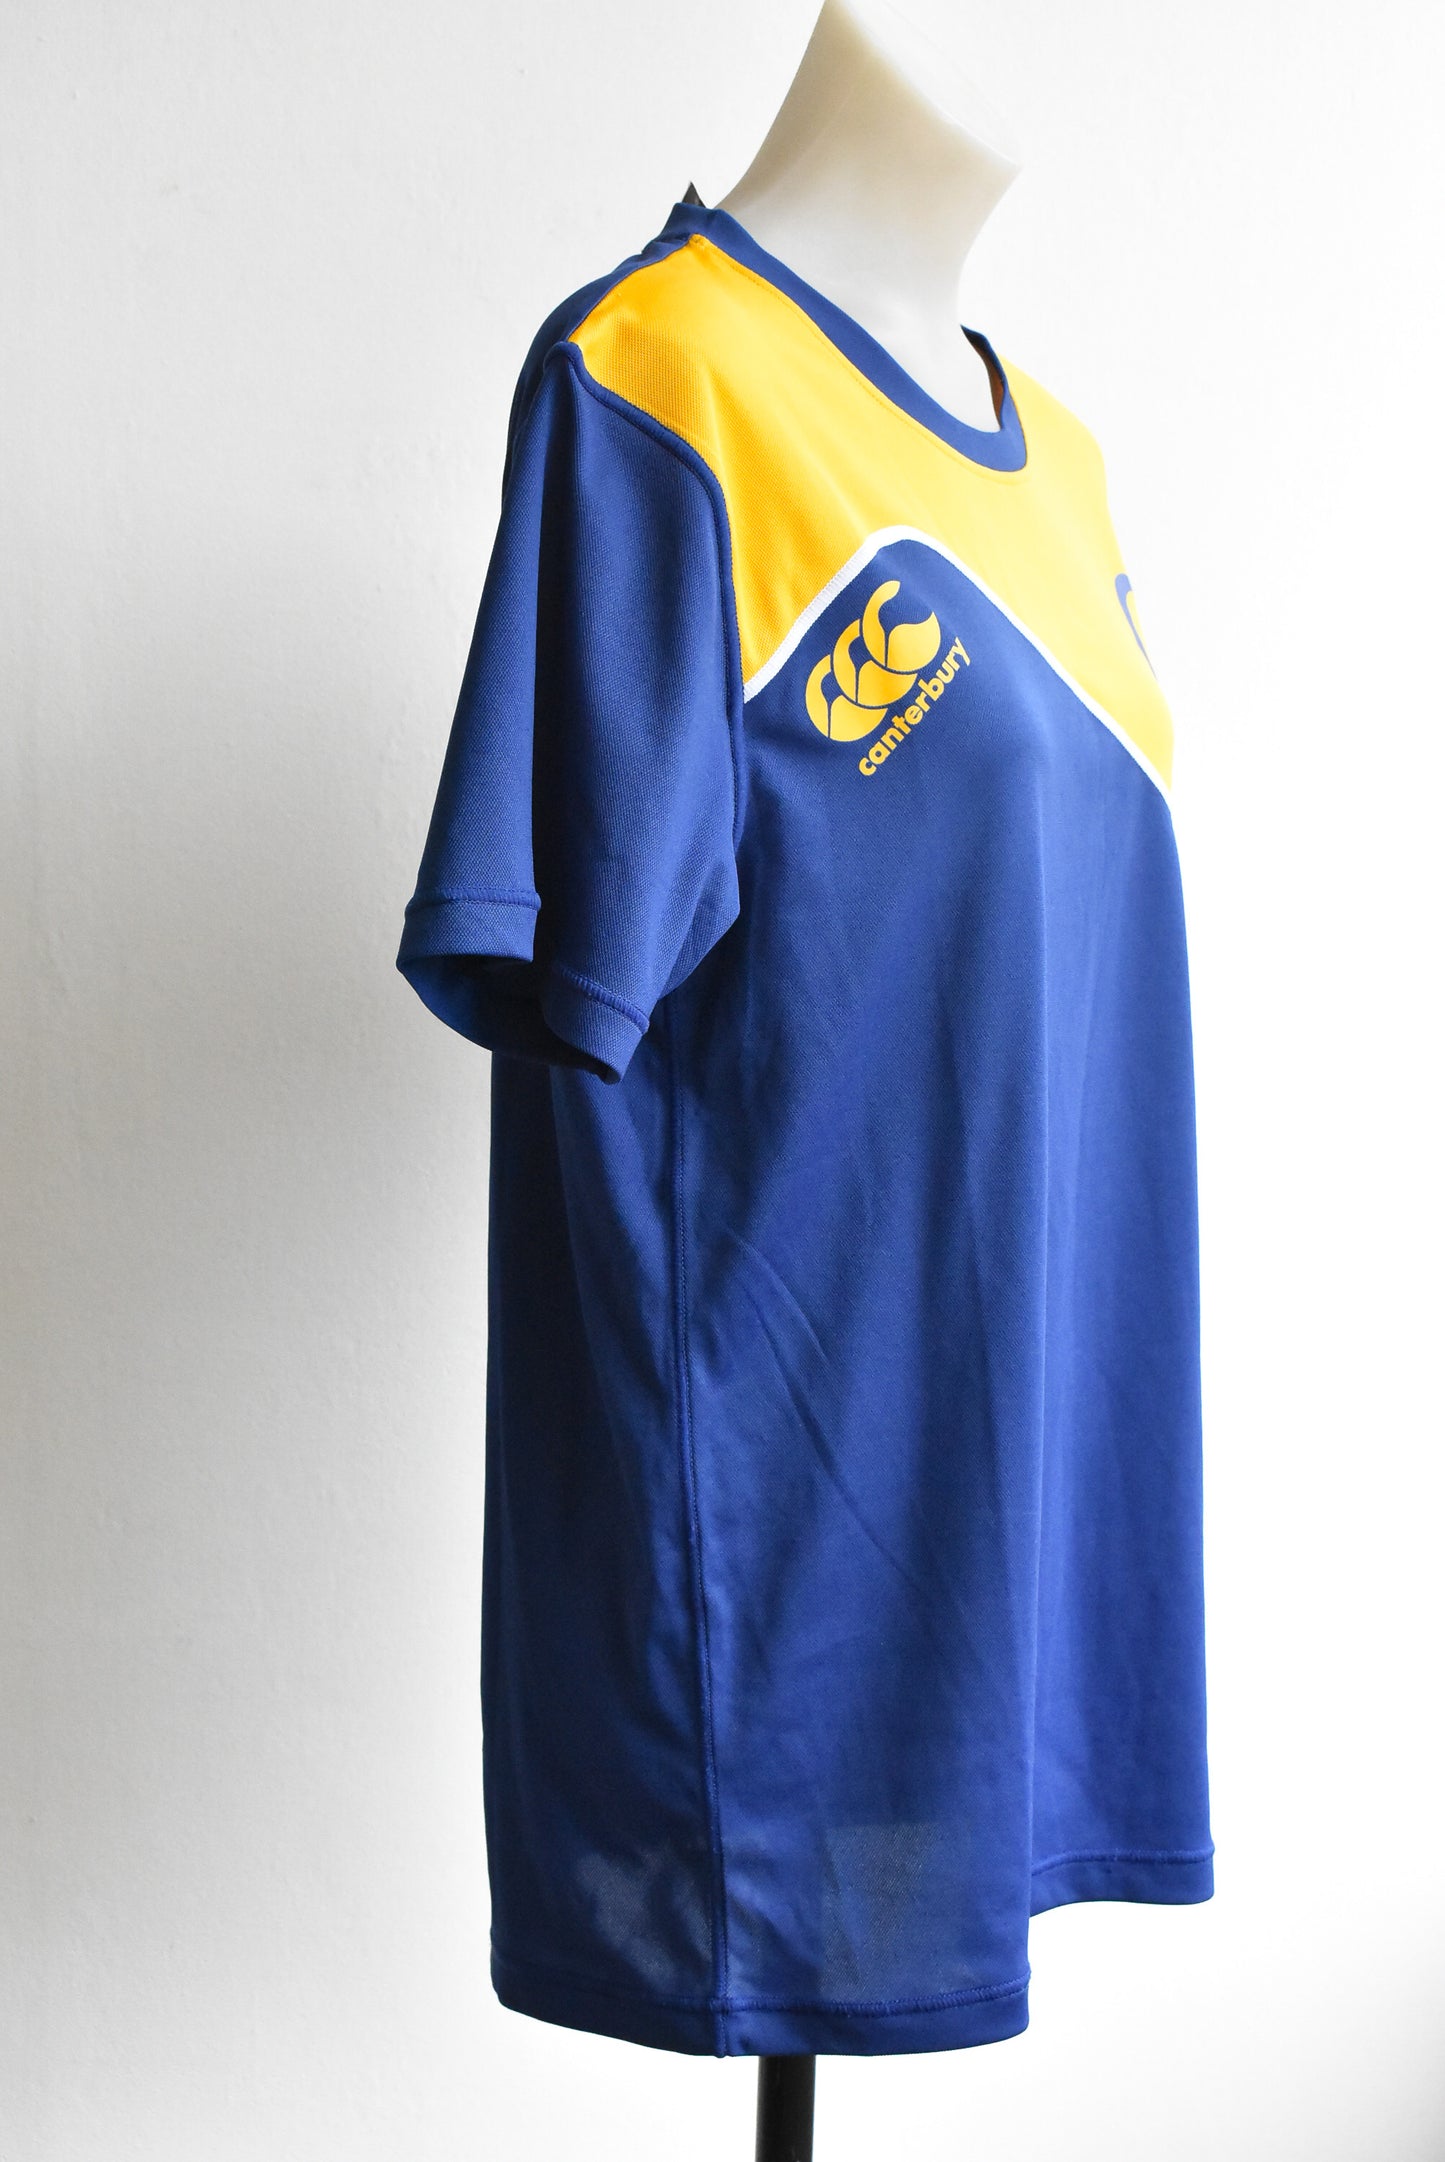 Canterbury sports Tee shirt Size M